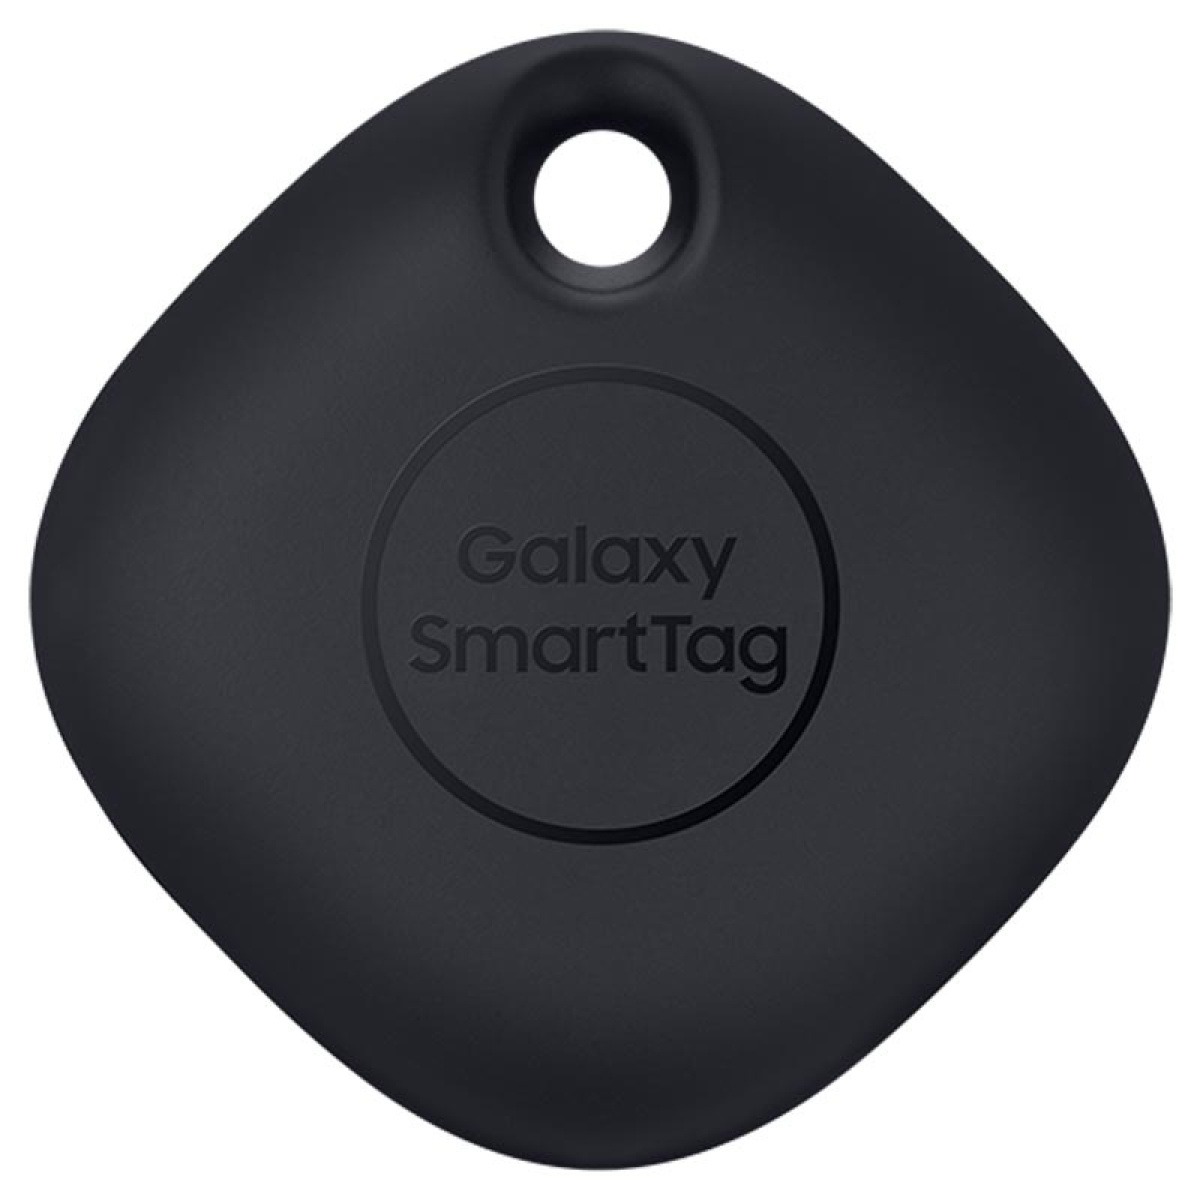 samsung galaxy smarttag bluetooth tracker ei t5300 black 8806090854453 03022021 01 p